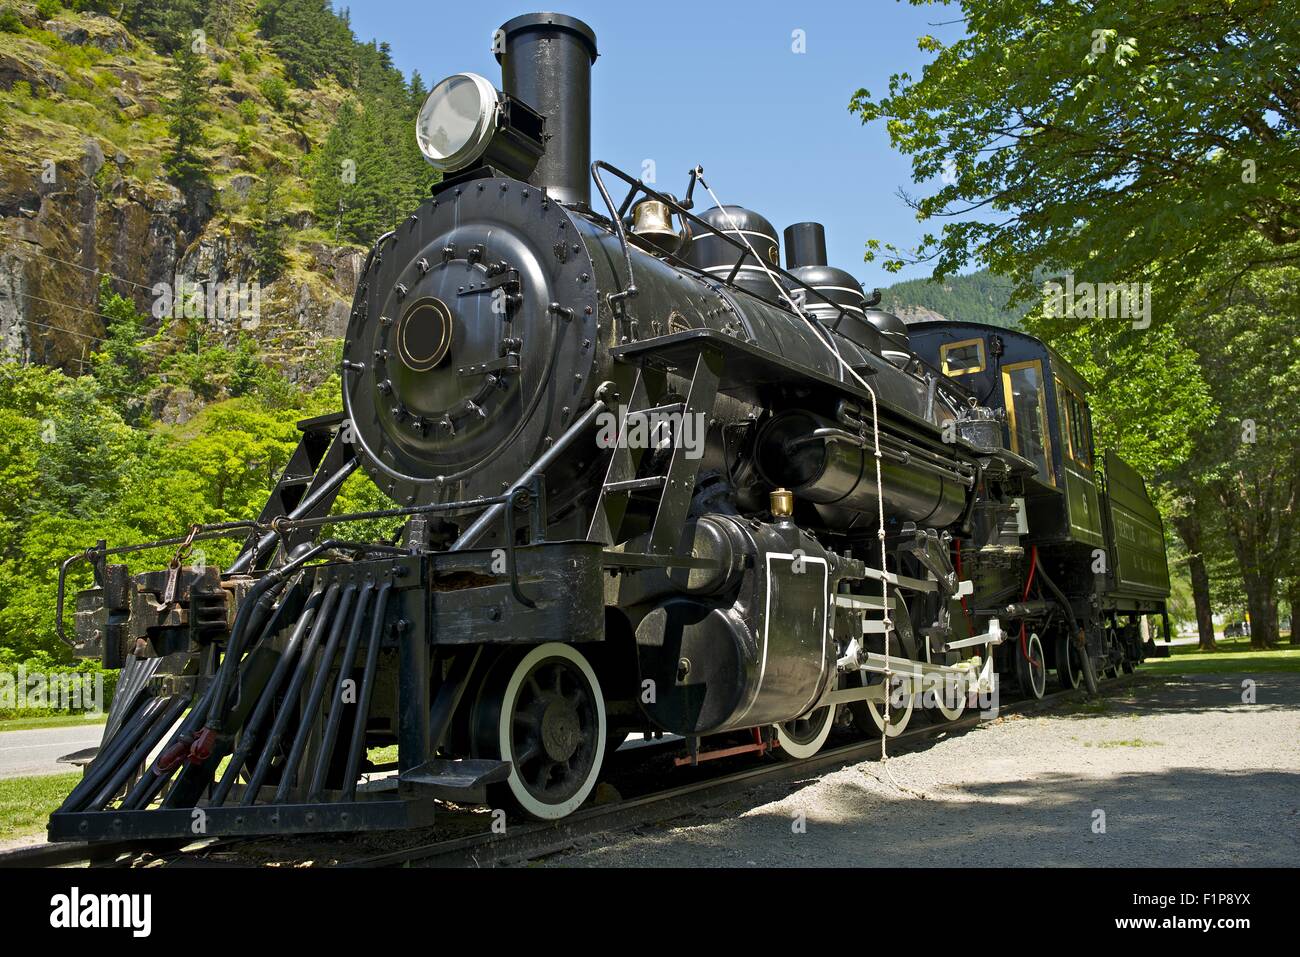 Old Western Steam Locomotive - Historical Railroad Locomotive Exposition. Washington State, USA. Transportation Photo Collection Stock Photo